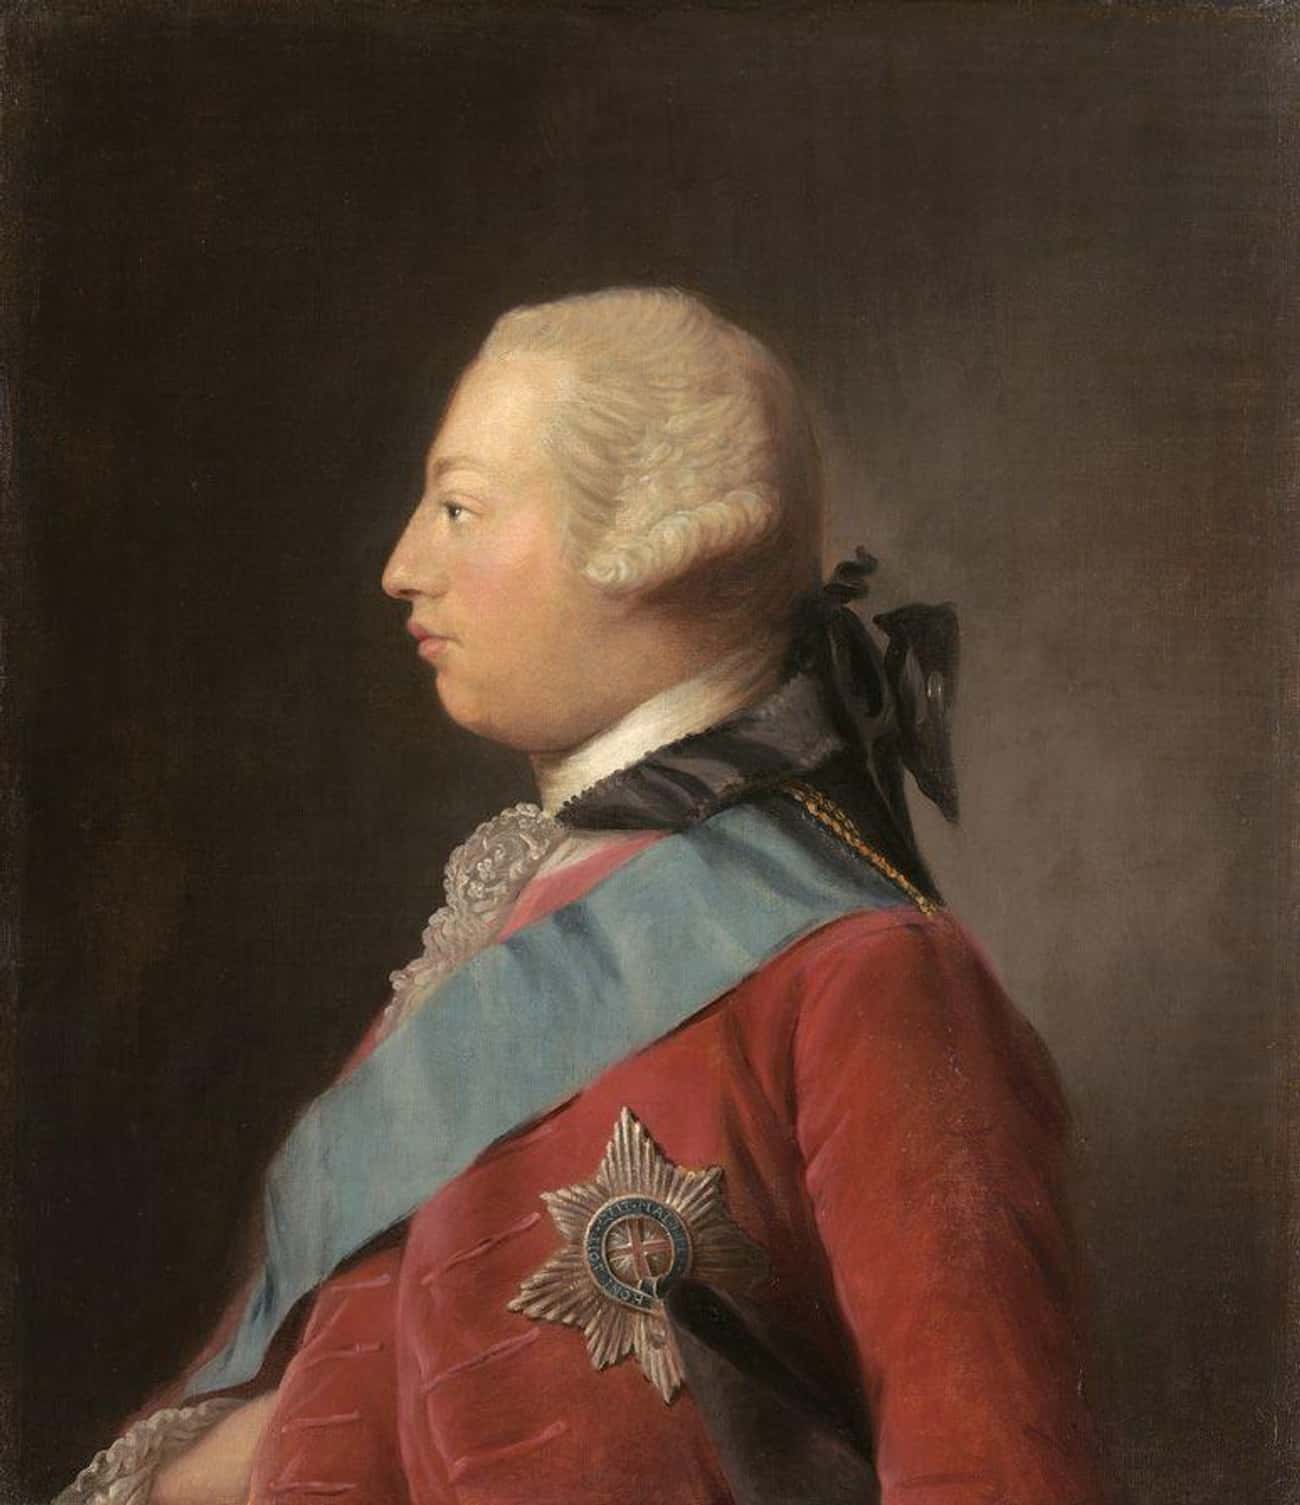 A Hereditary Blue Urine Disease May Have Driven King George III Insane